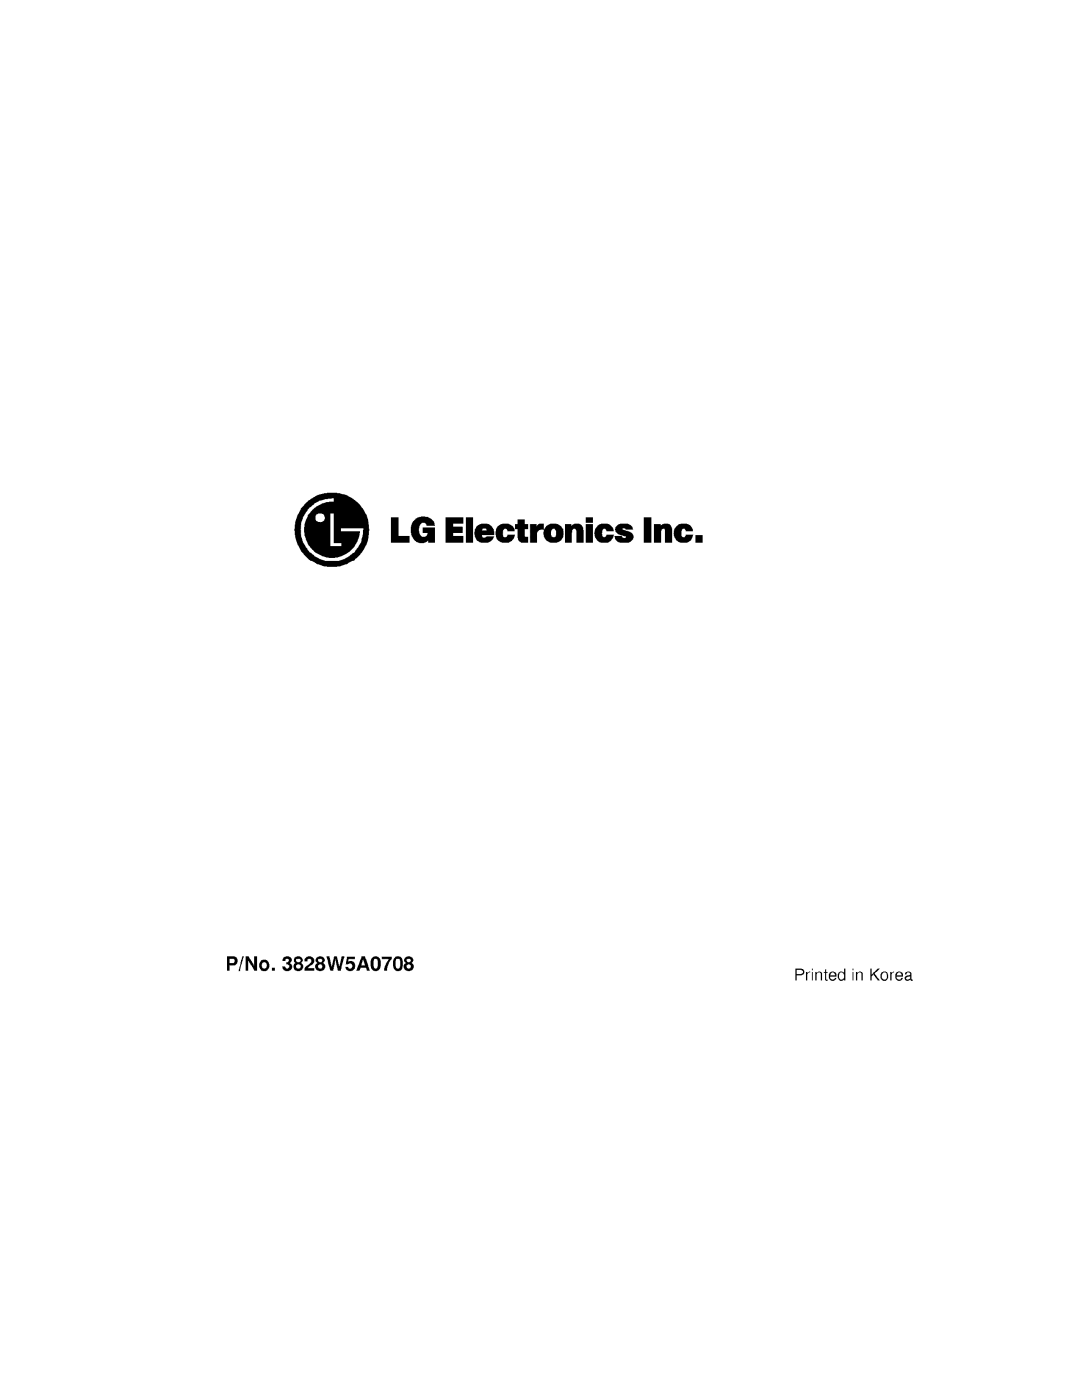 LG Electronics MV-1310W, MV-1310B owner manual P/No. 3828W5A0708, LG Electronics Inc 